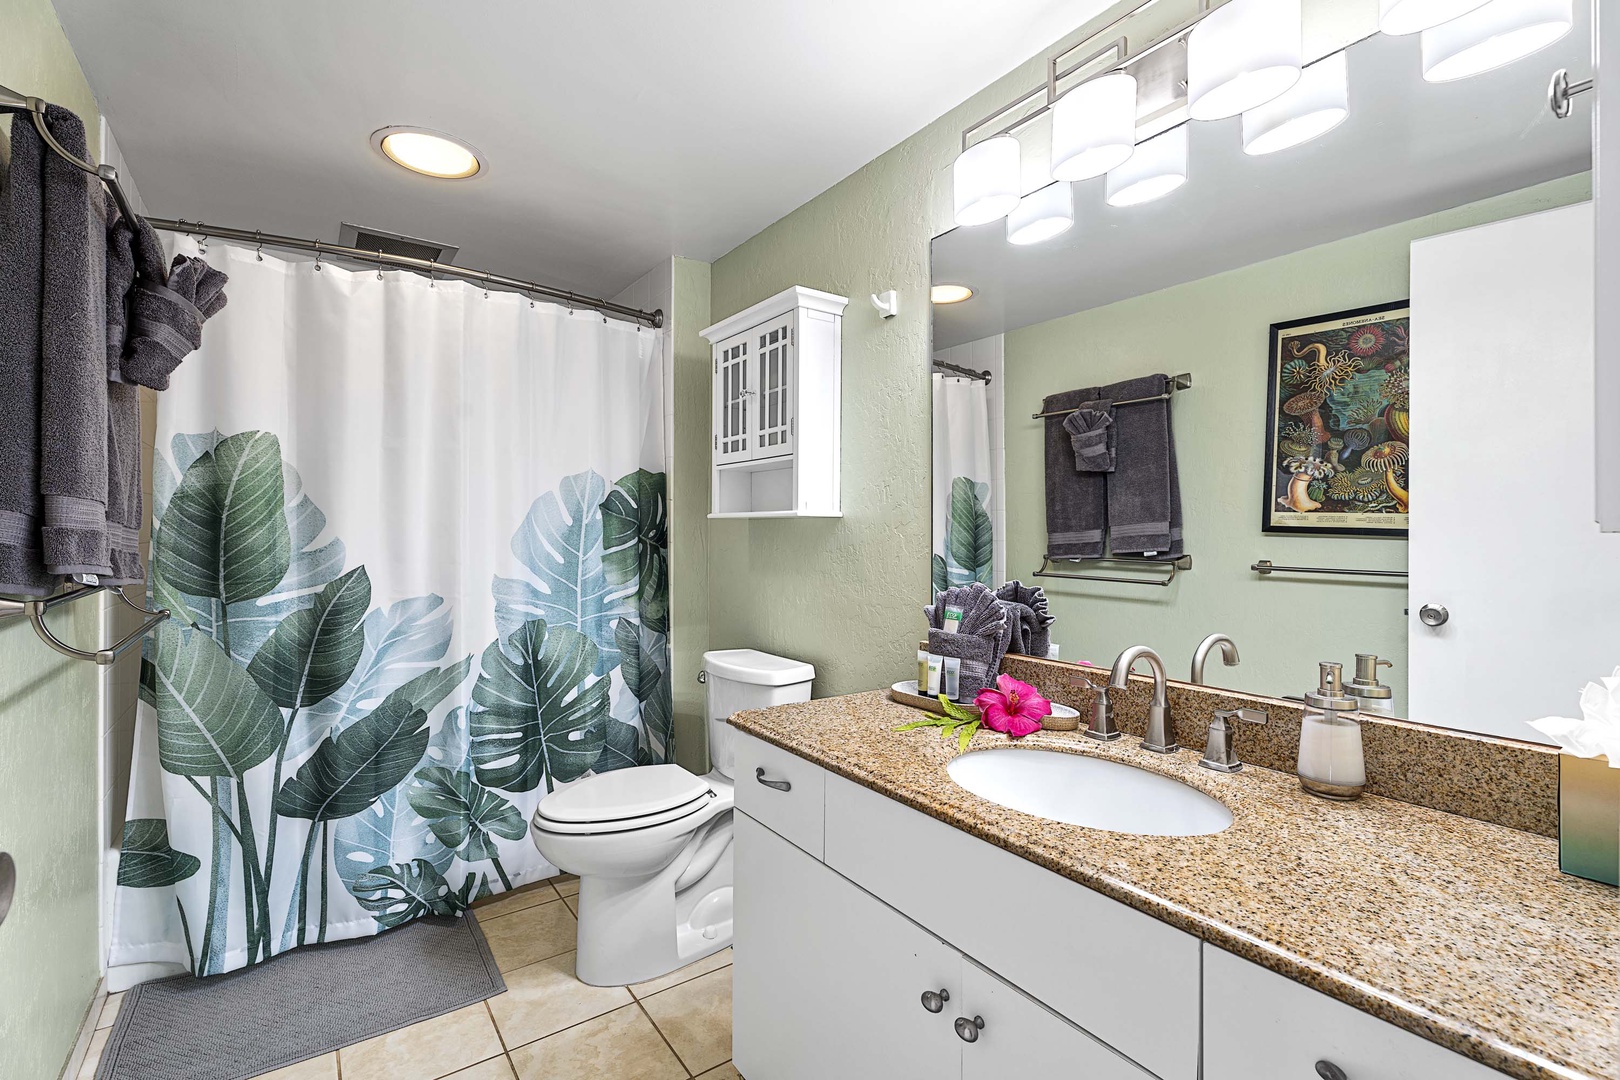 Kailua Kona Vacation Rentals, Kona Makai 6303 - Well-lit mirror on your home's full bathroom with a tub